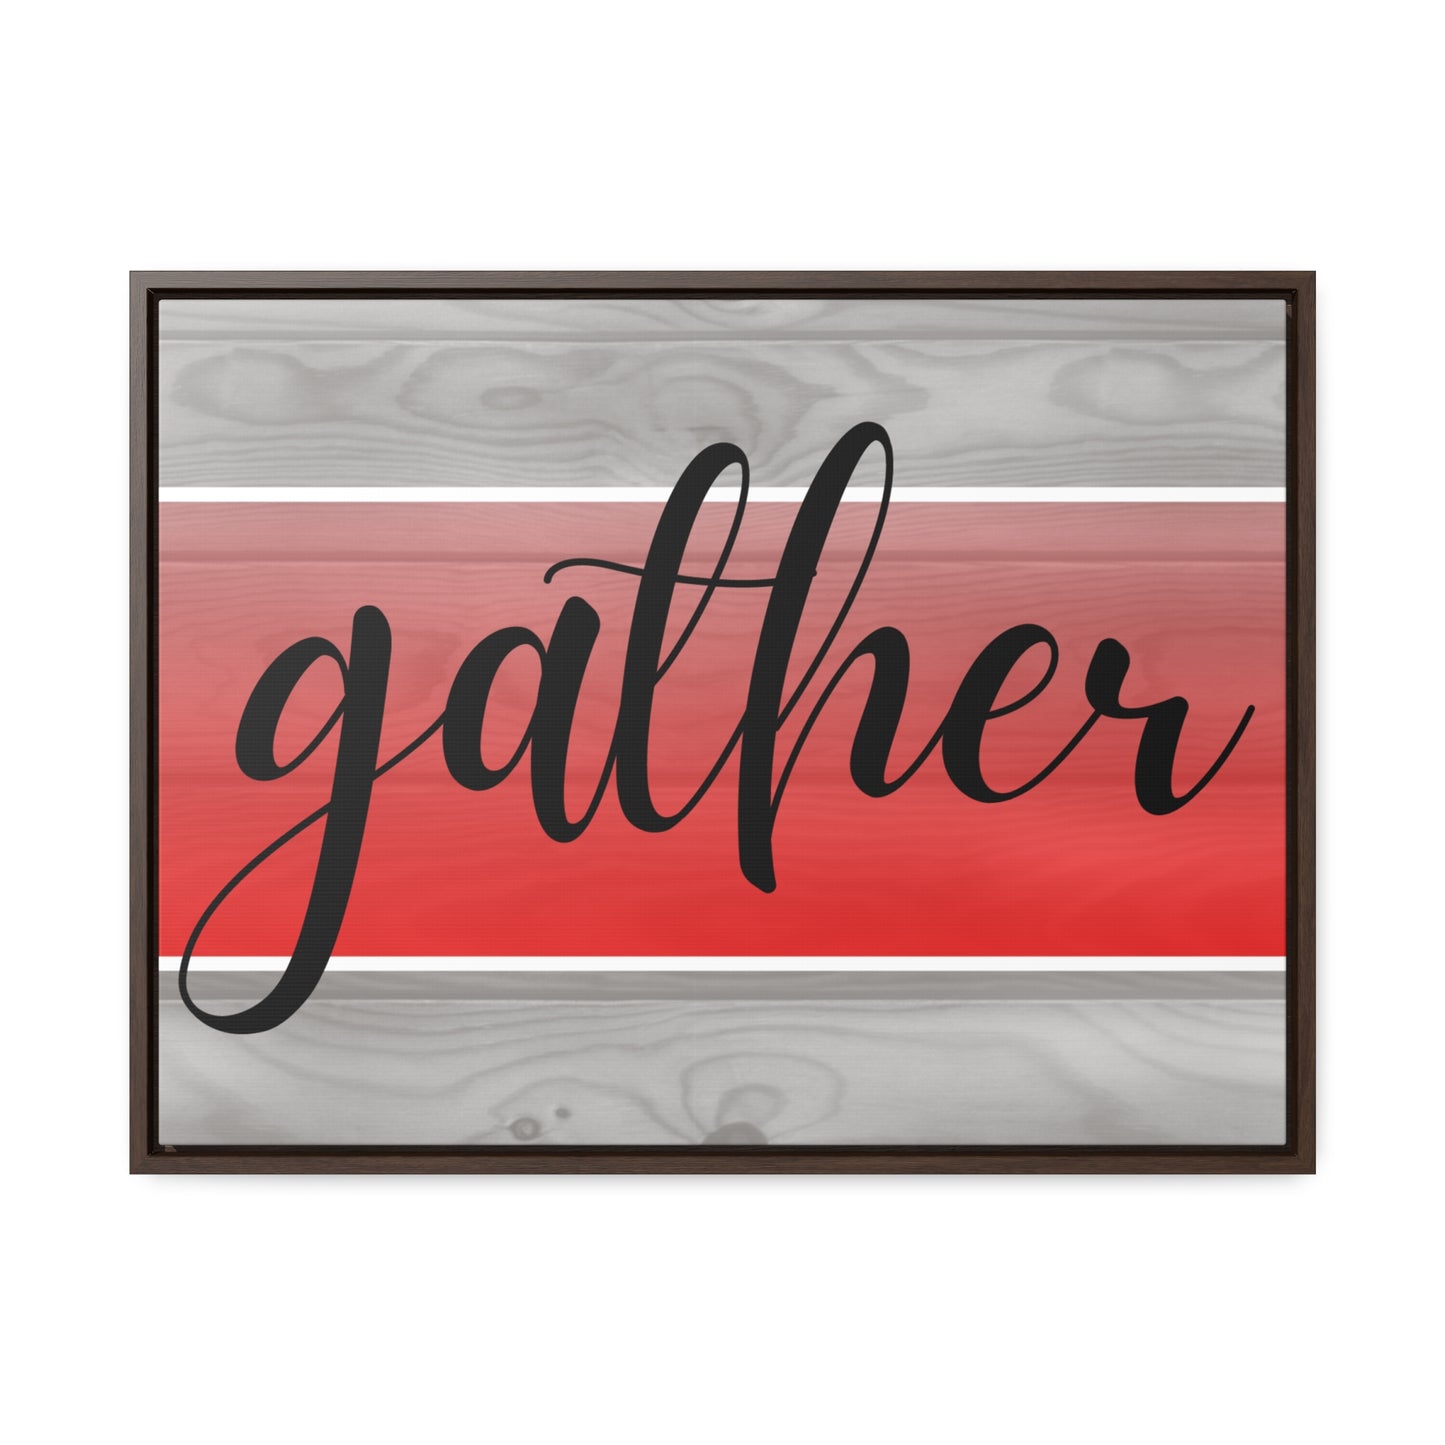 Christian Wall Art: Gather (Floating Frame)